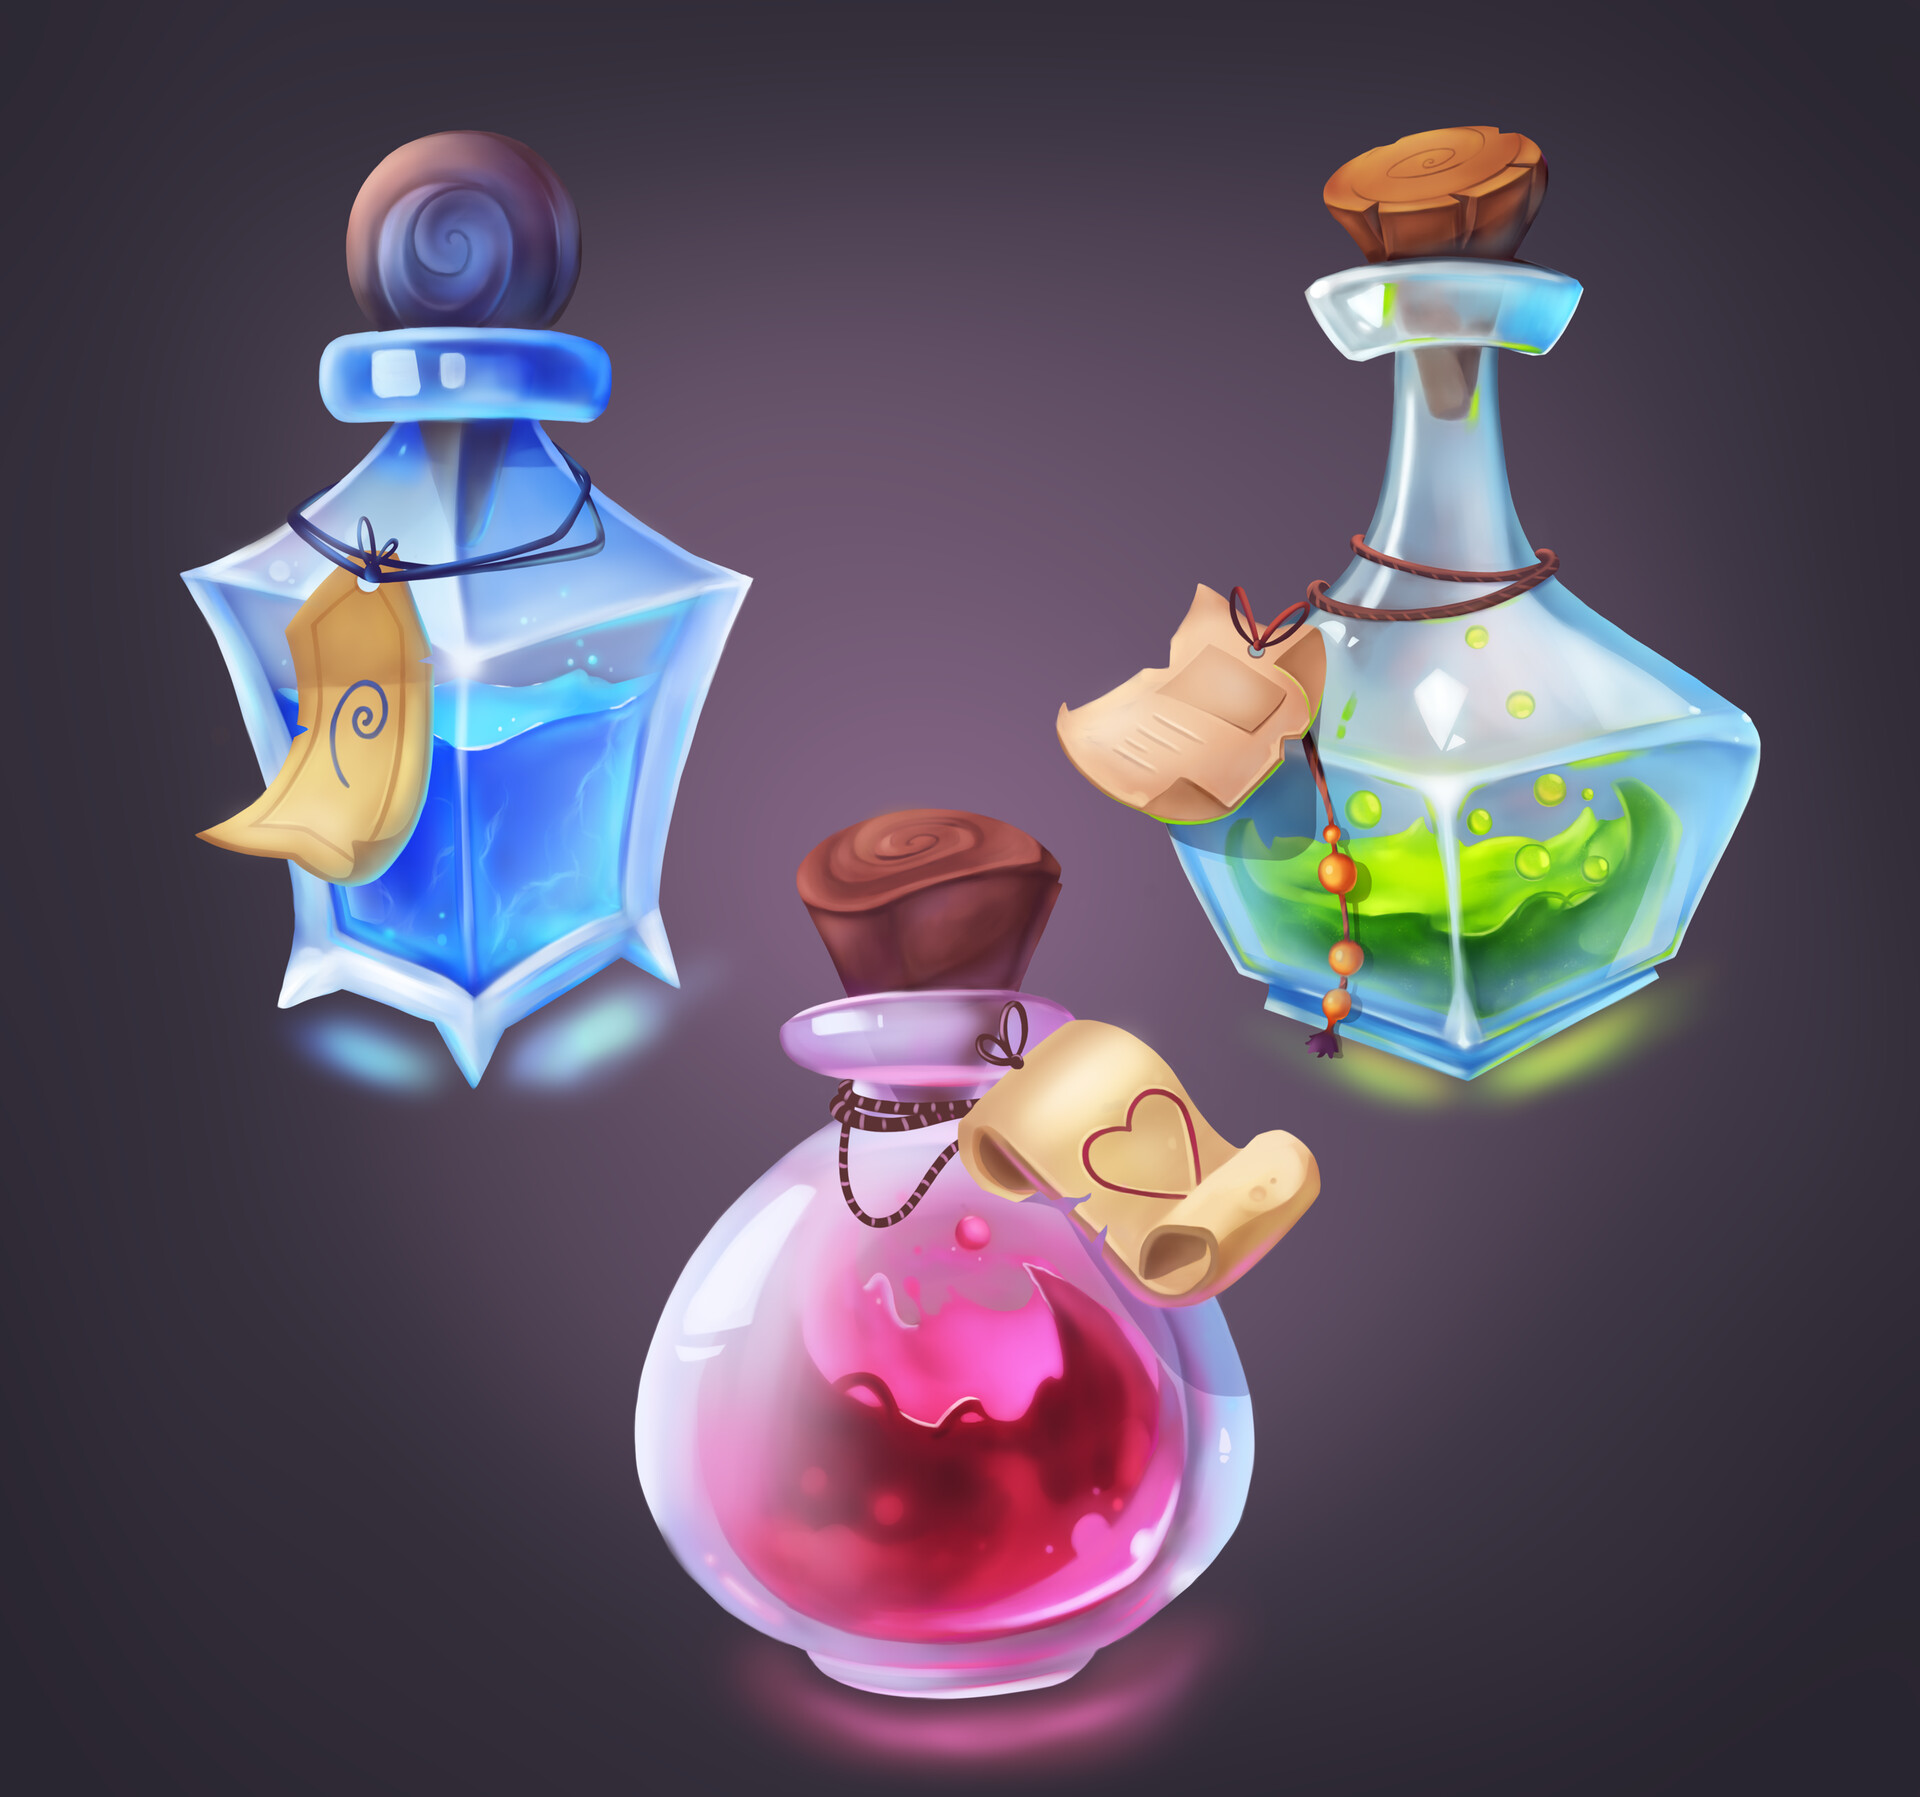 ArtStation - Magic potion